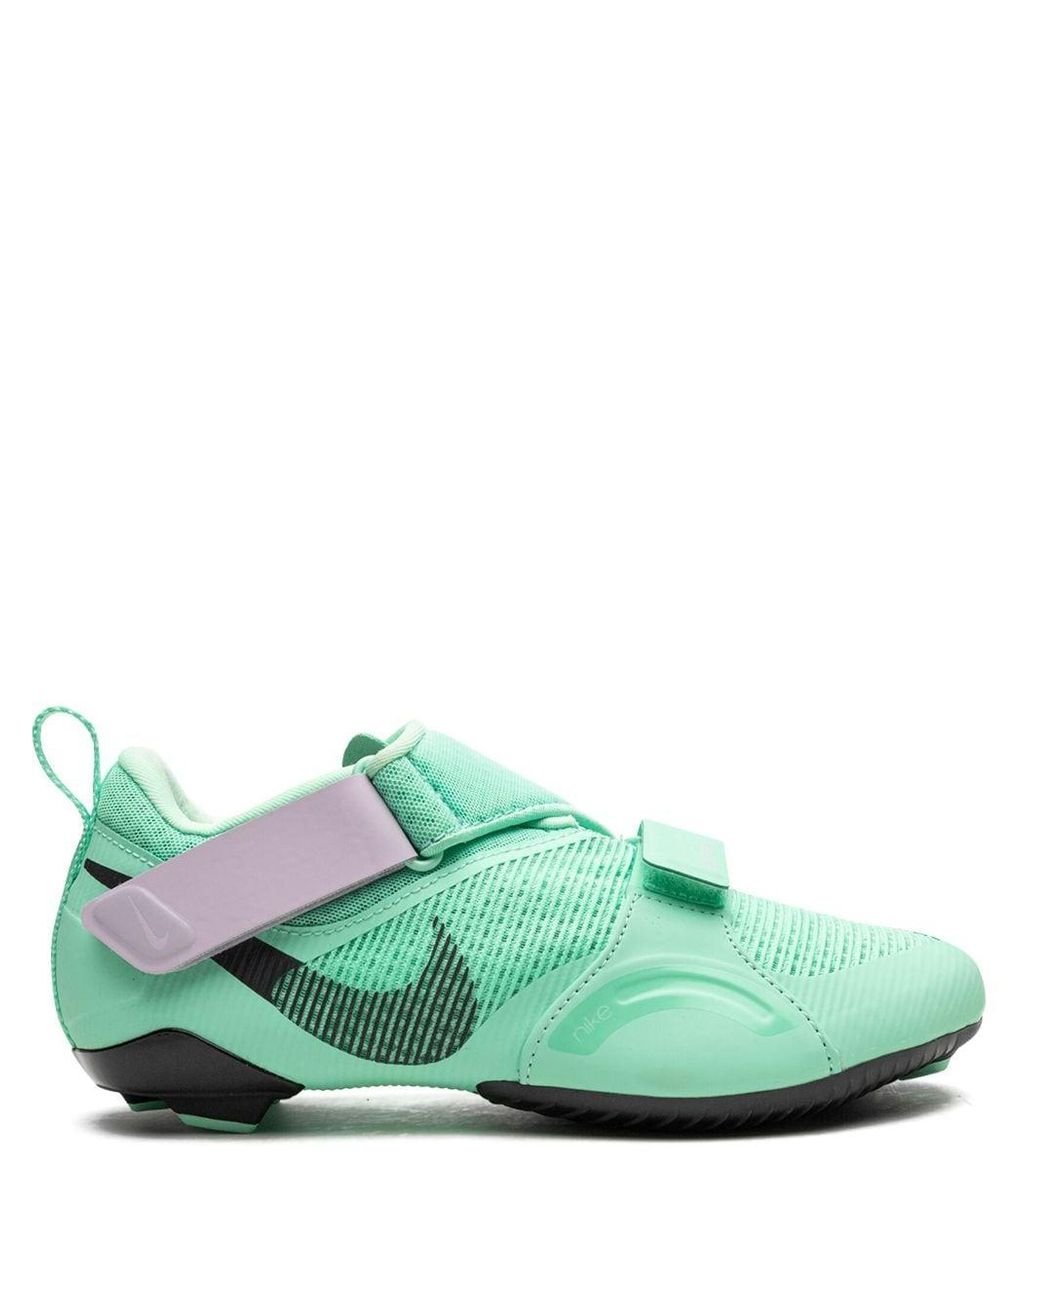 Nike Super Rep Cycle Sneakes in Green | Lyst